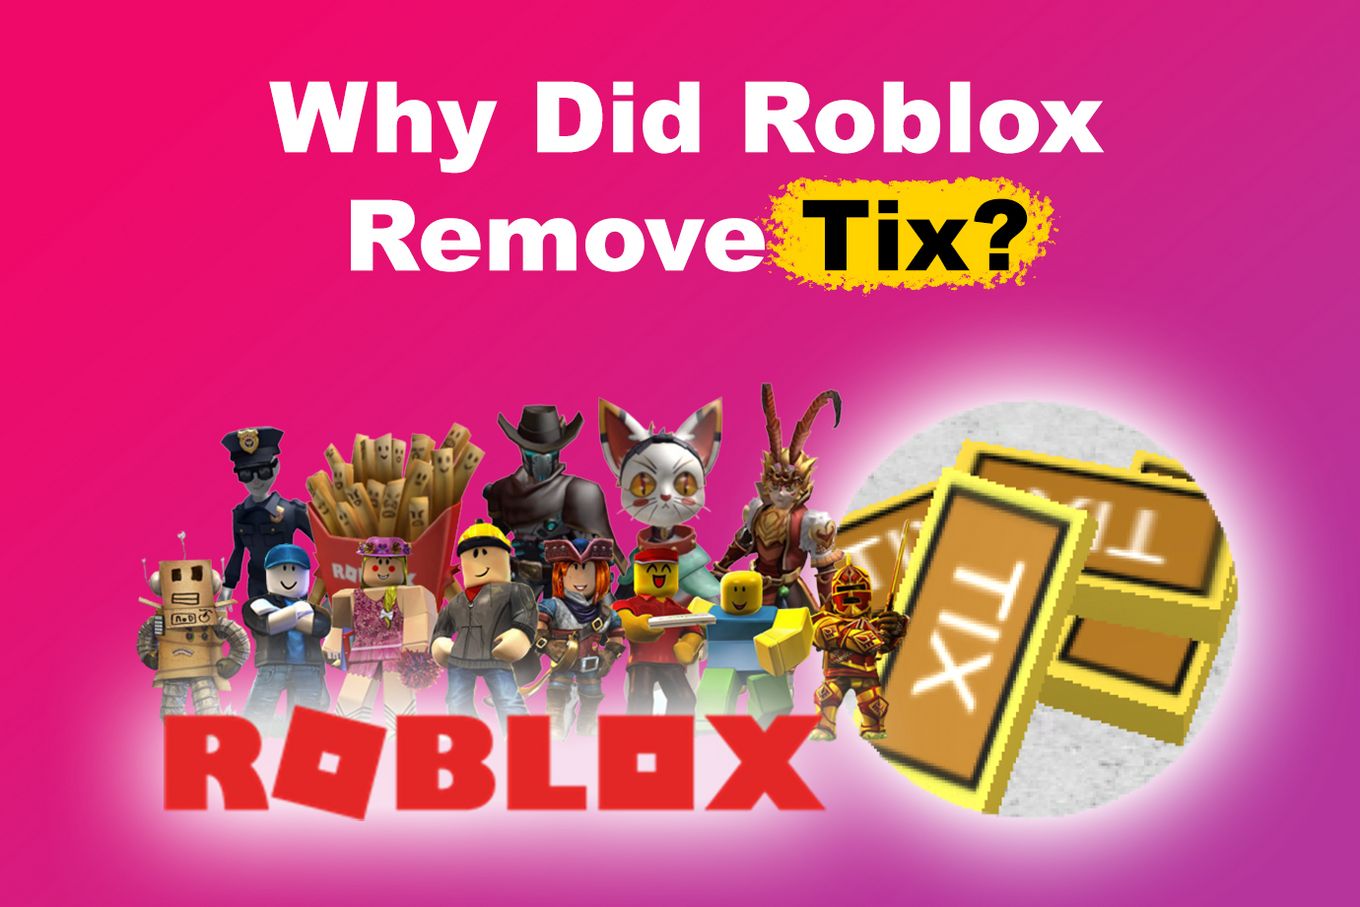 Why Did Roblox Remove Tix?